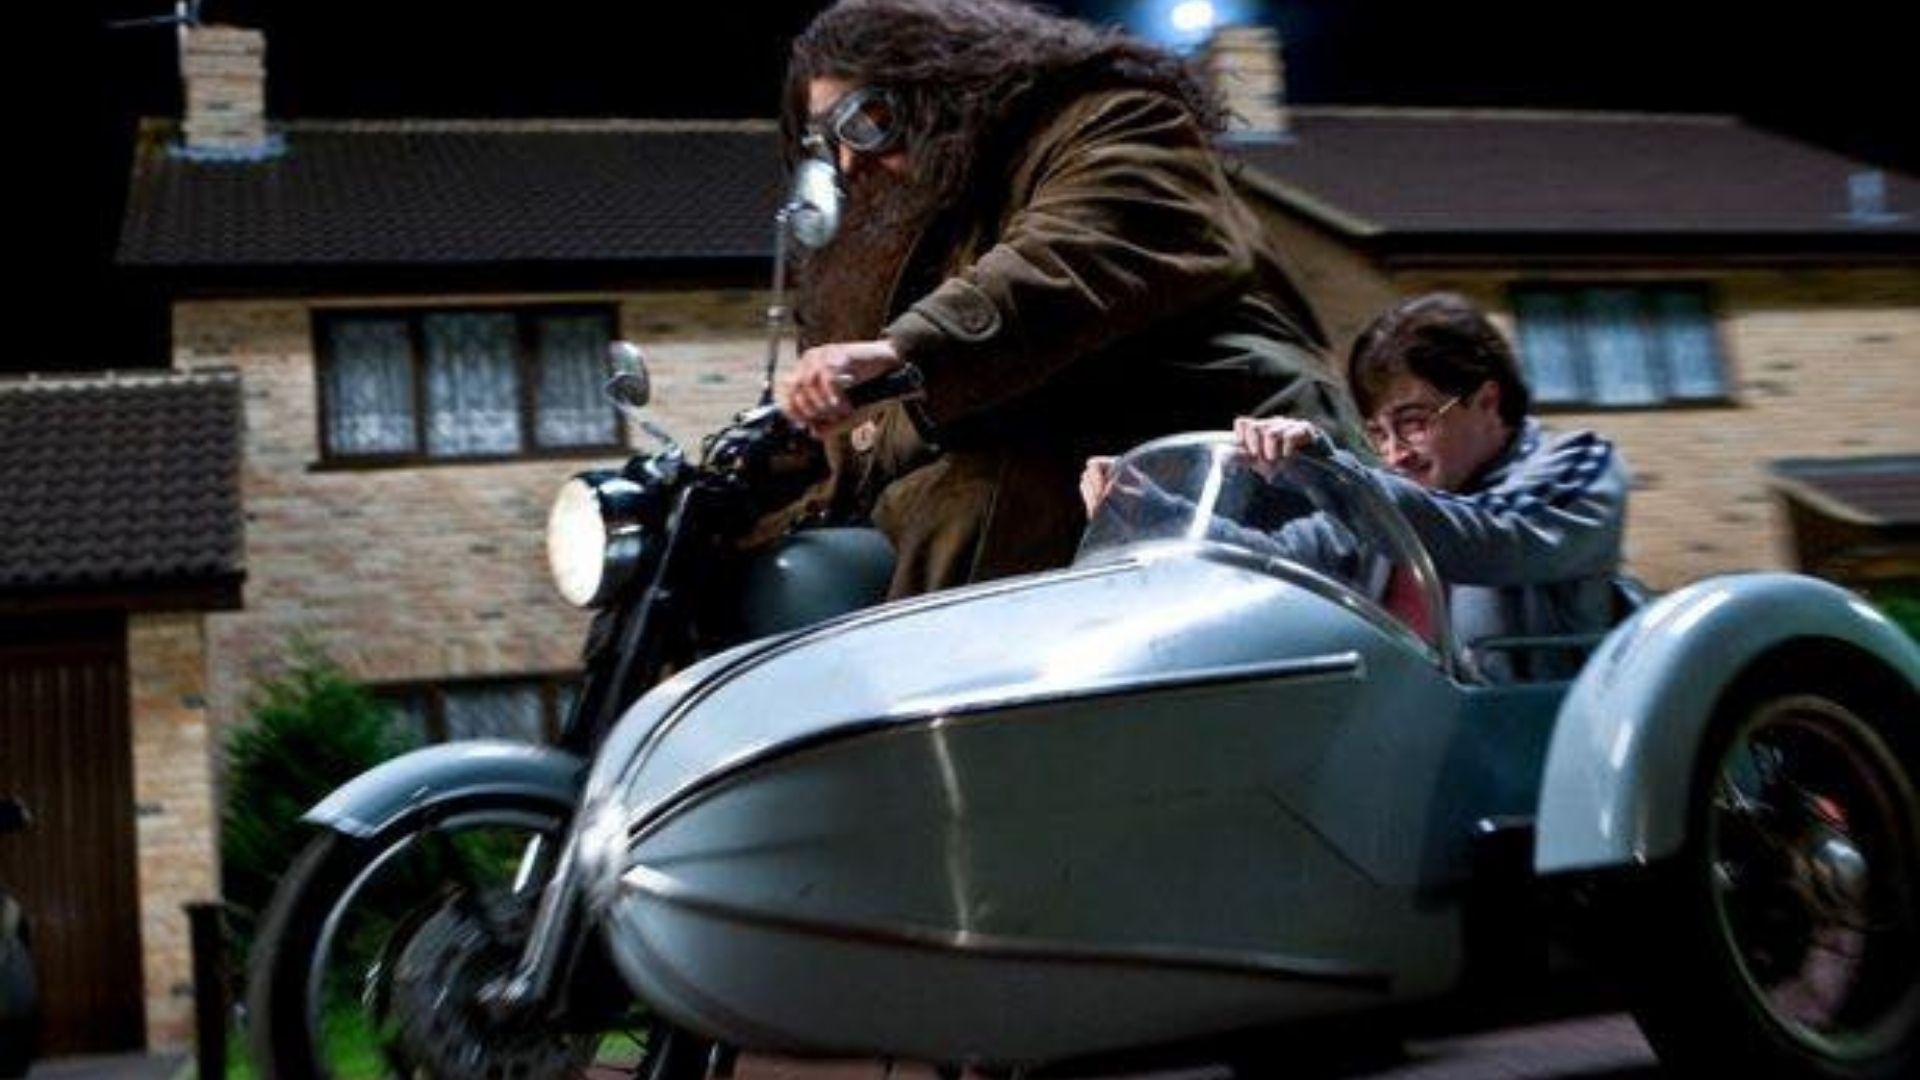 Hagrid movie, Motorcycle Monday, Hagrid's vehicle, Biker culture, 1920x1080 Full HD Desktop